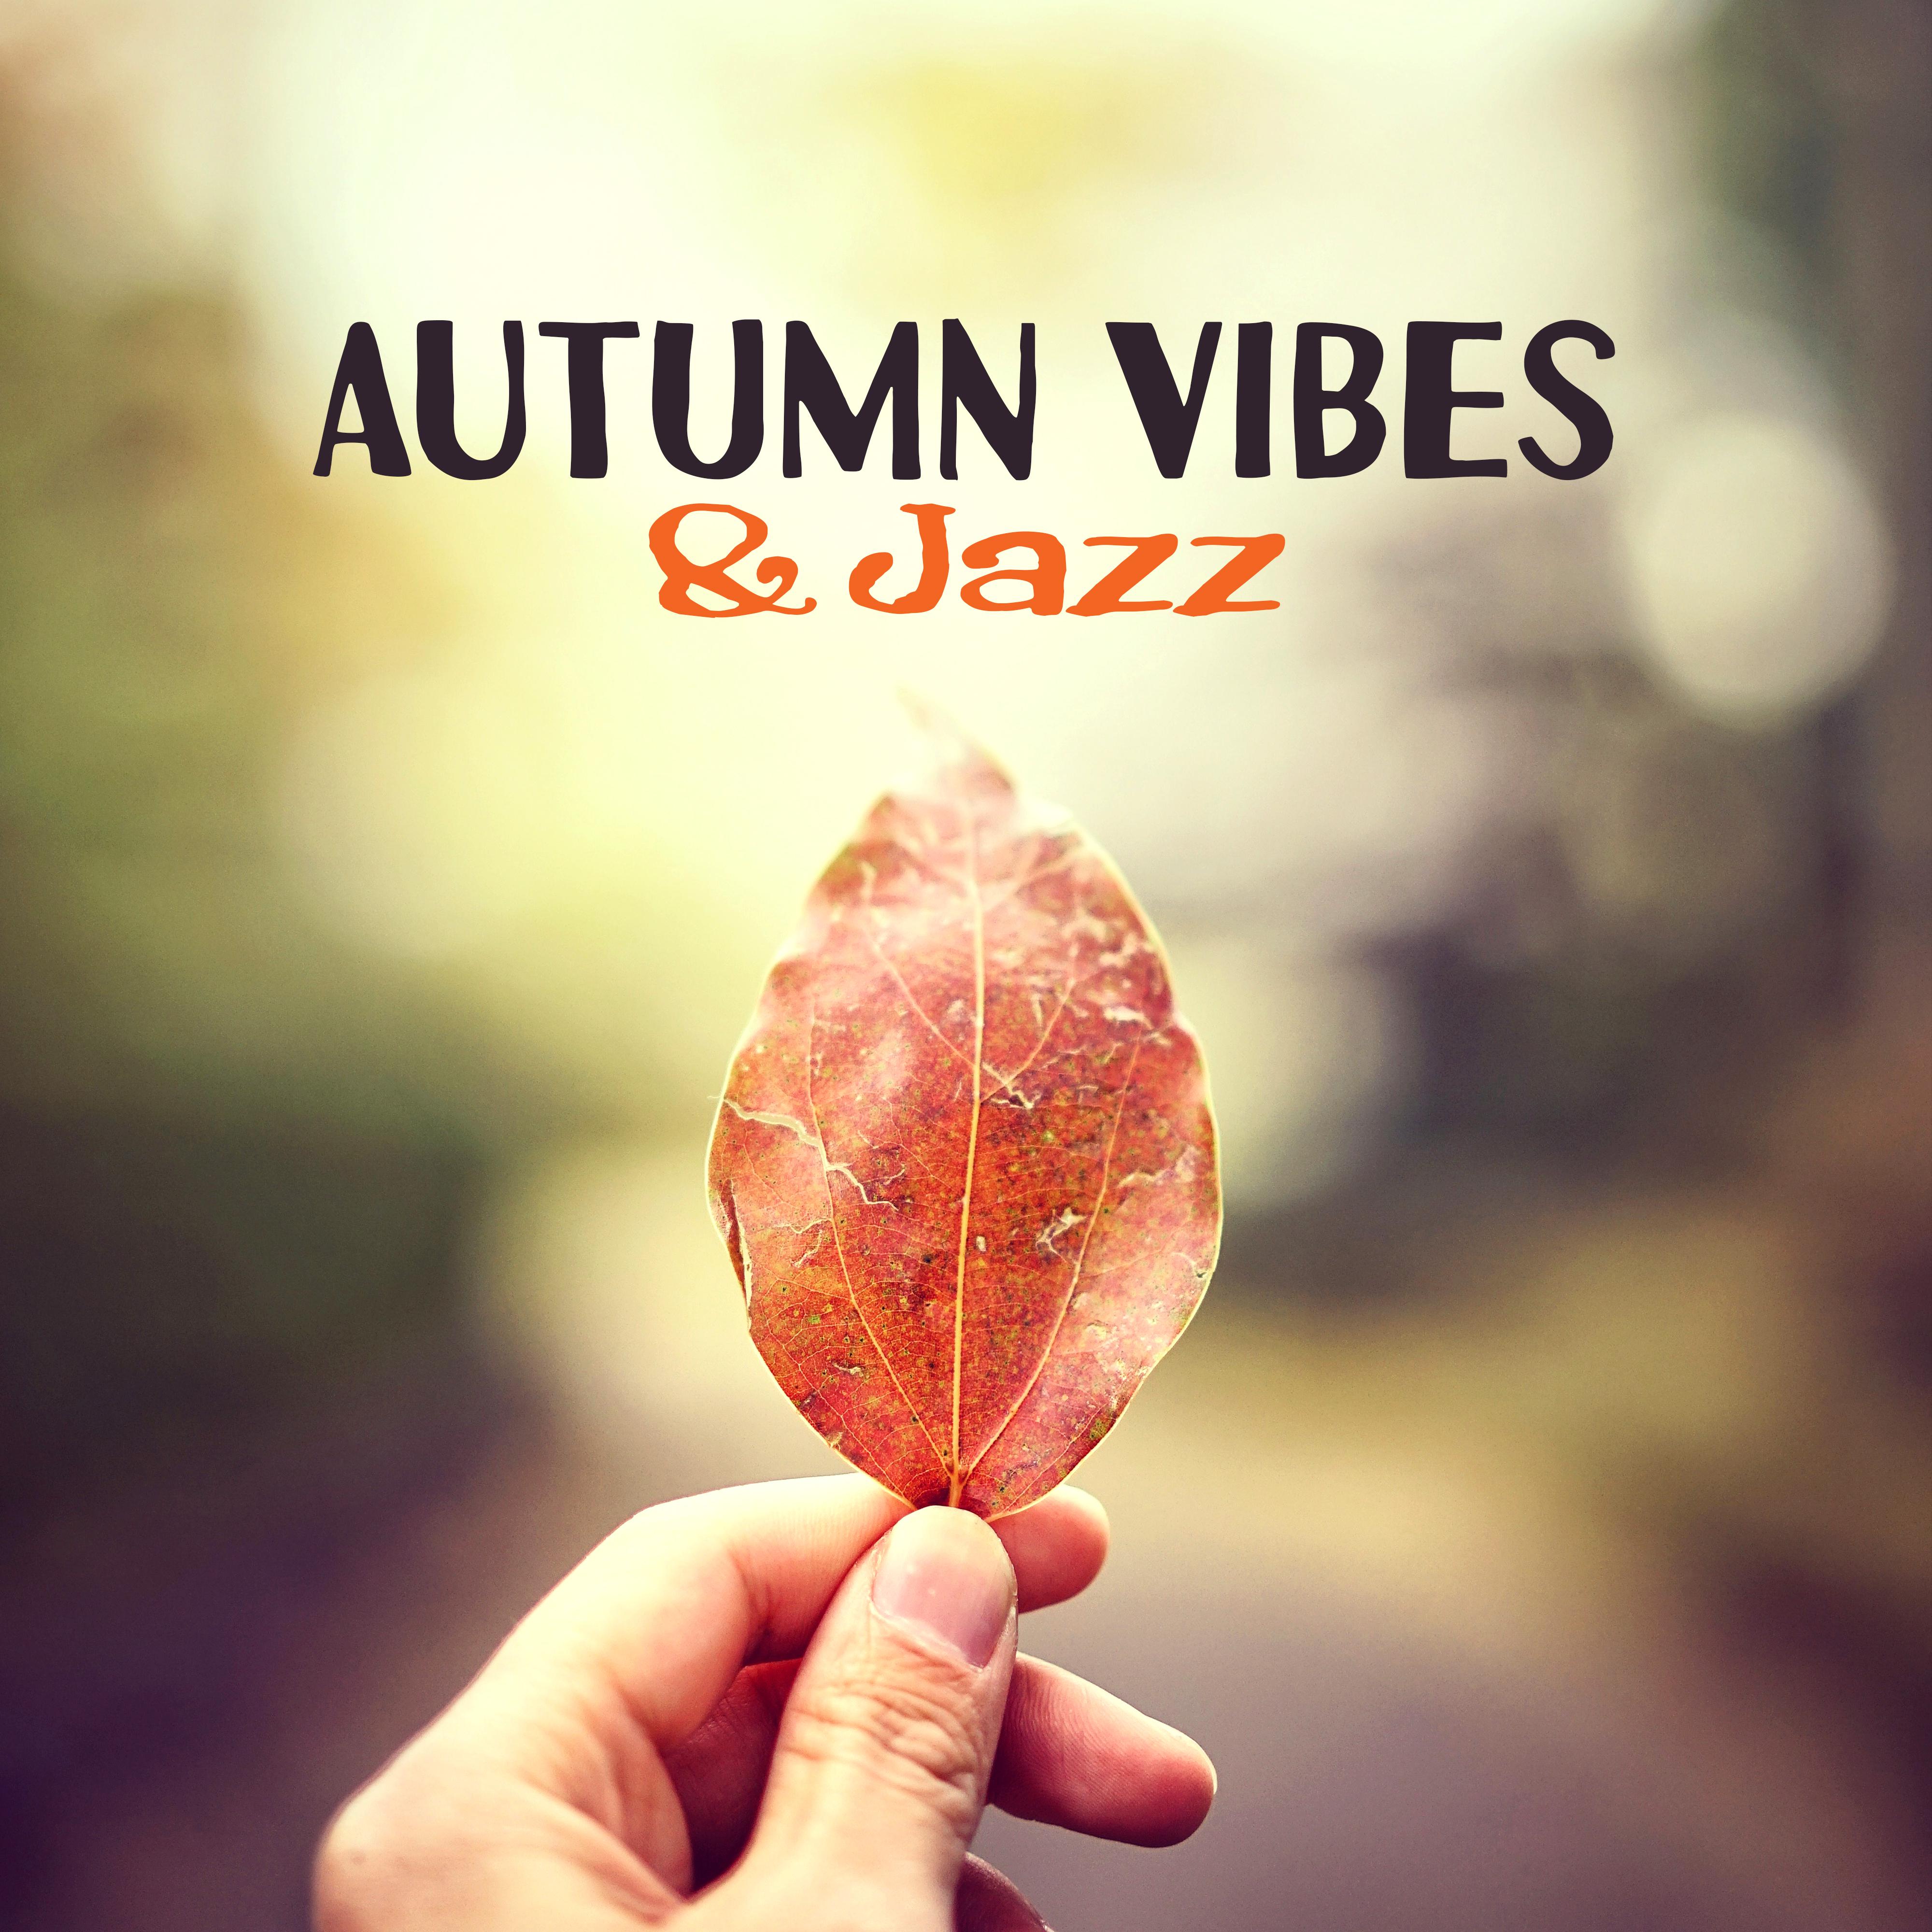 Autumn Vibes  Jazz  Melancholy Jazz, Instrumental Music, Smooth Jazz, Cafe Music, Chilled Mood